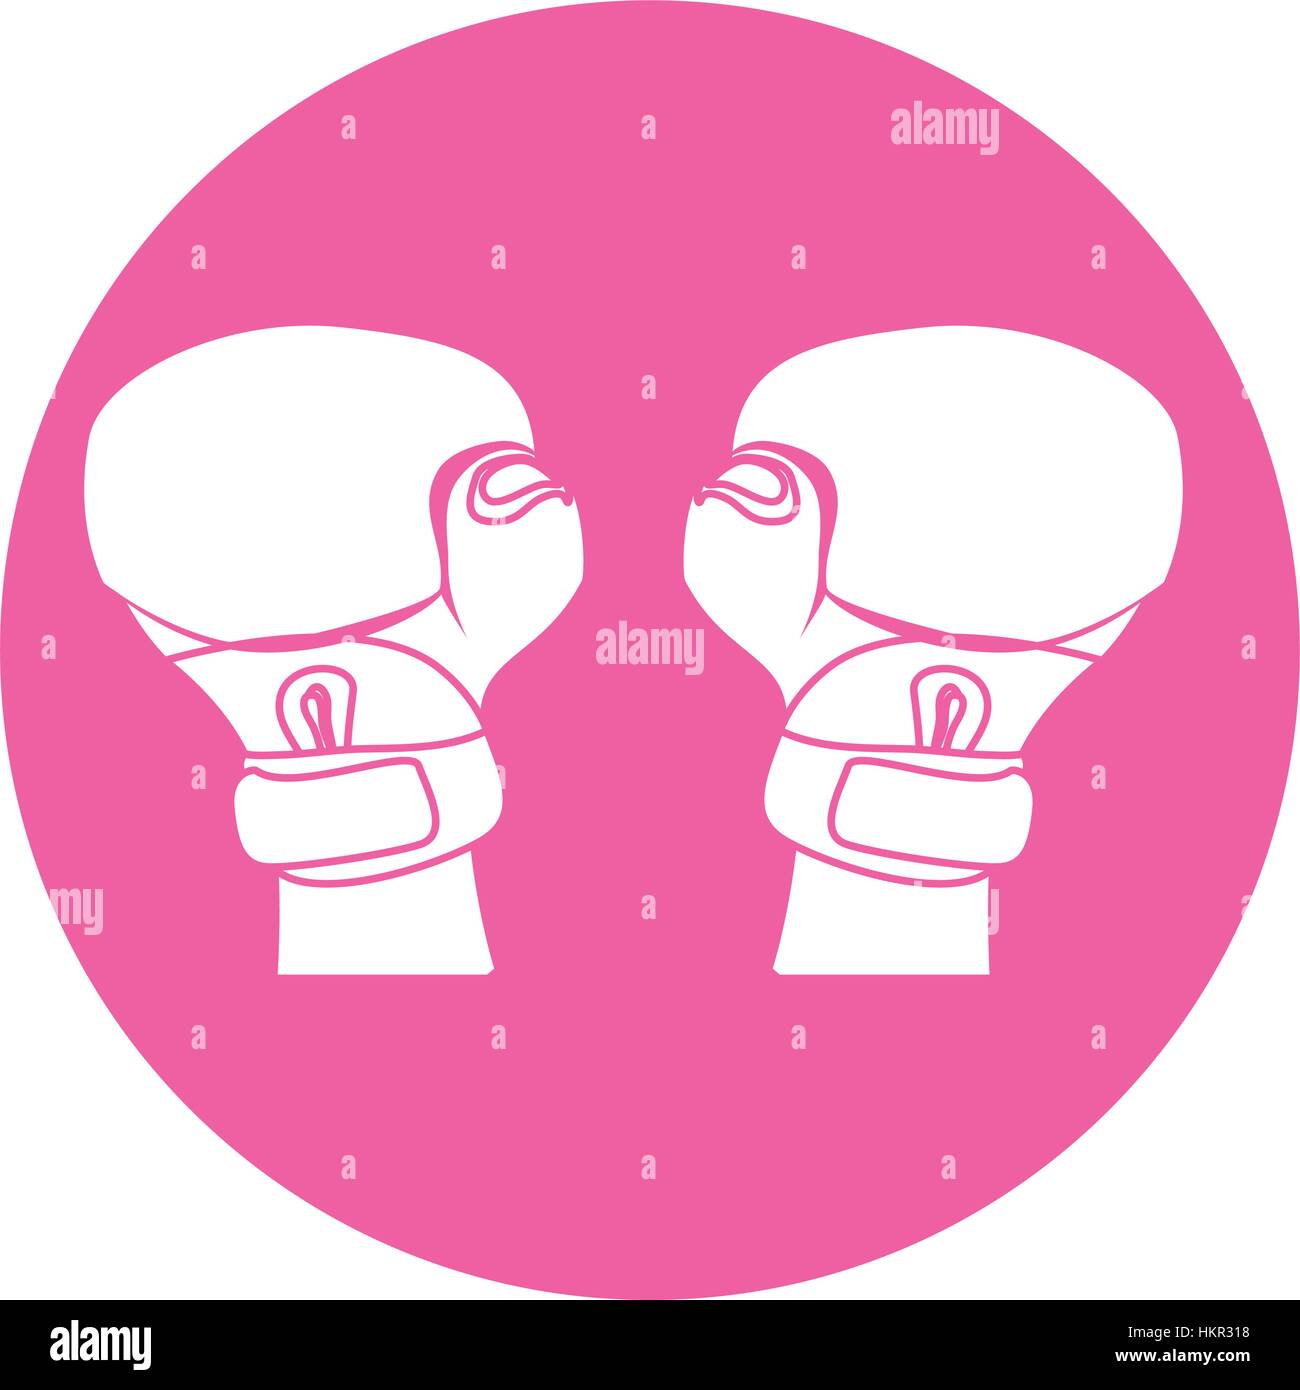 emblem boxing gloves icon image, vector illustration design Stock Vector